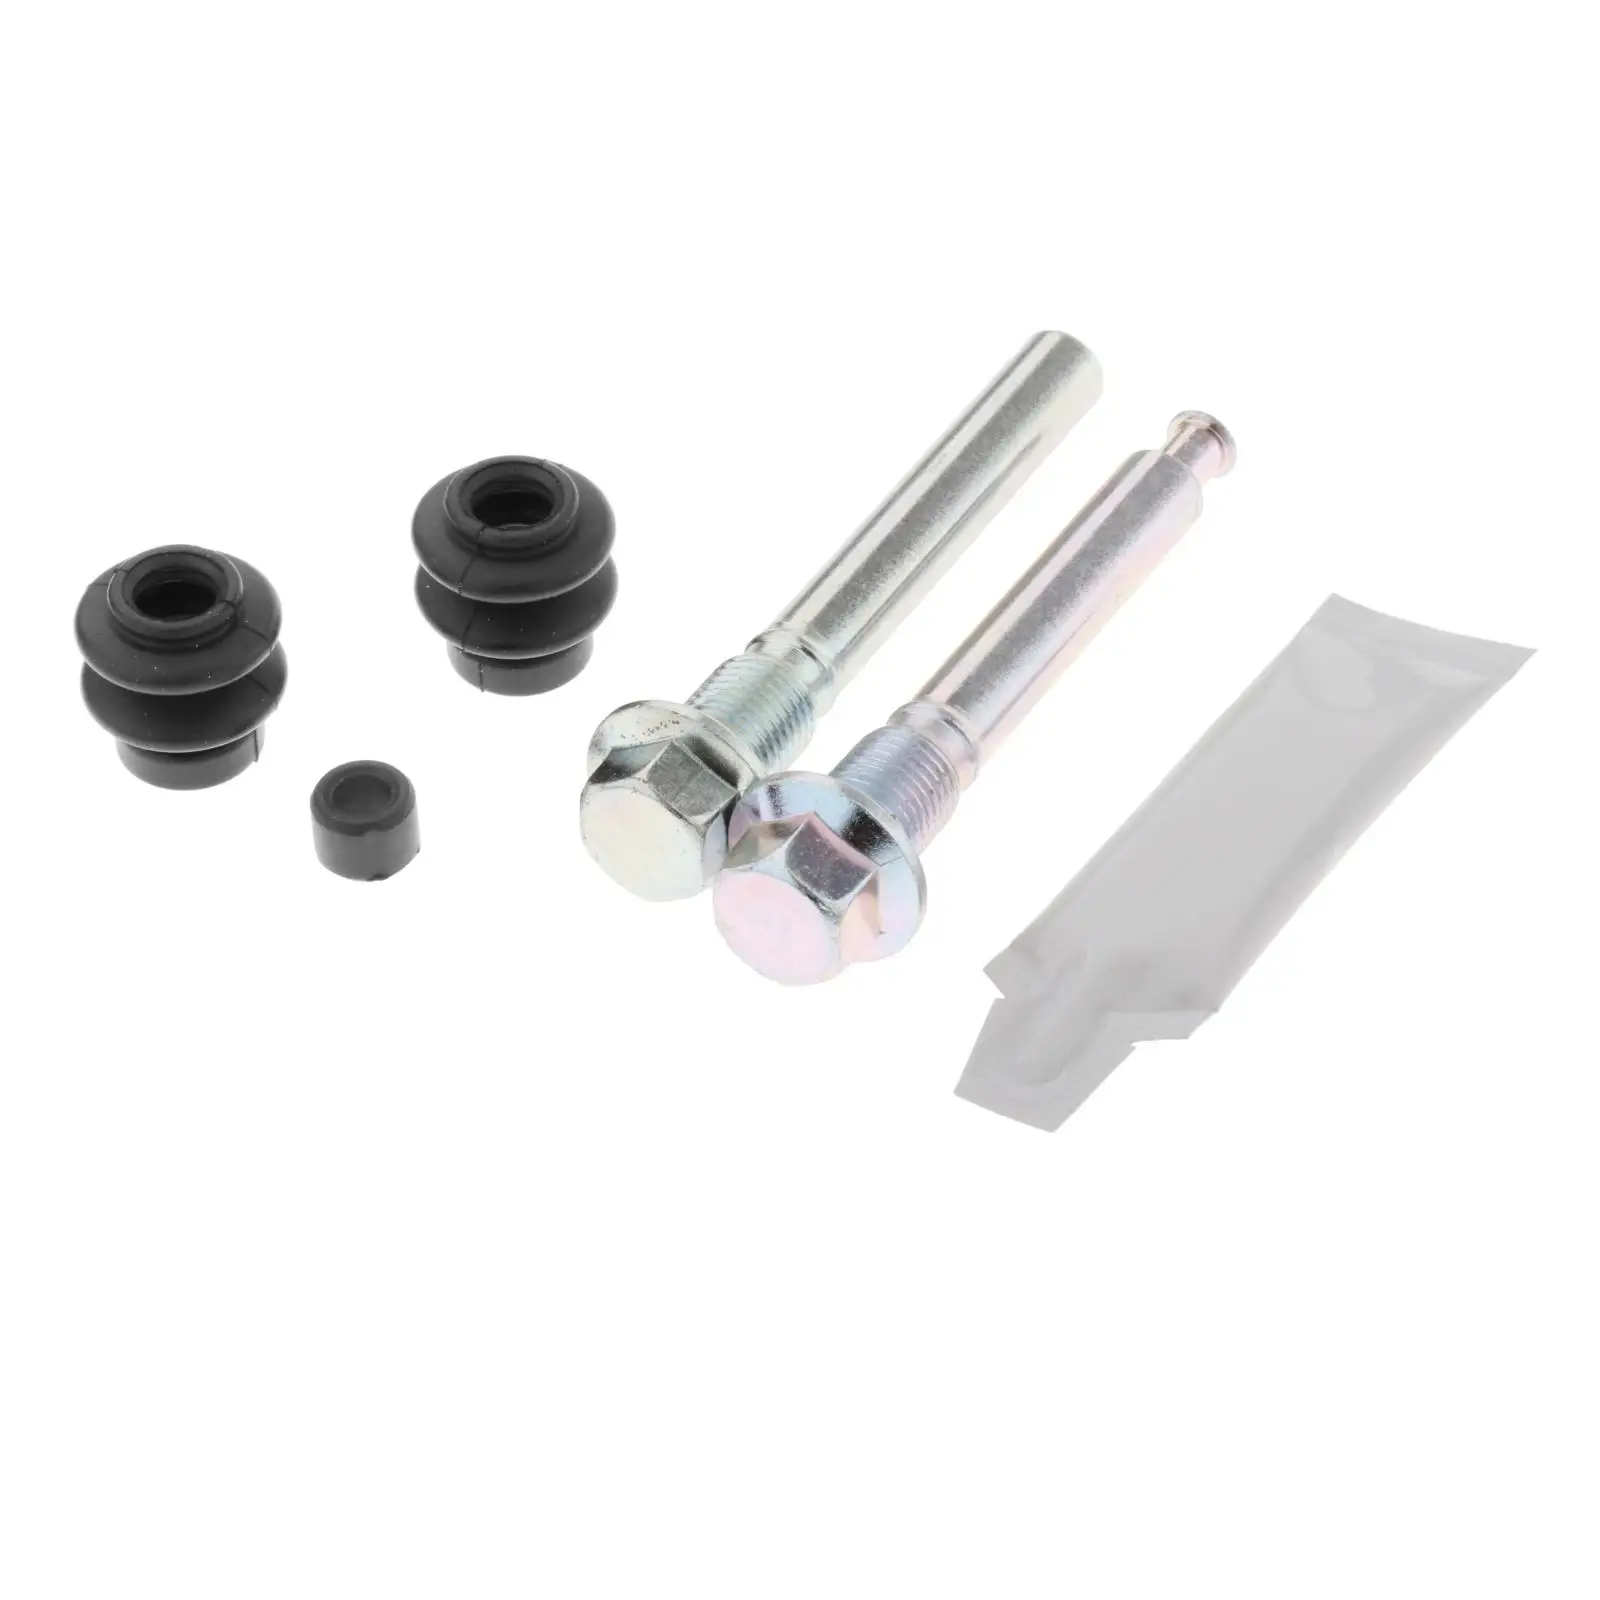 Rear Brake caliper Slider Pins Guide Car Accessories Rebuild Kit Bcf1402A Fits for Mazda 6 02-12 GG Gy GH